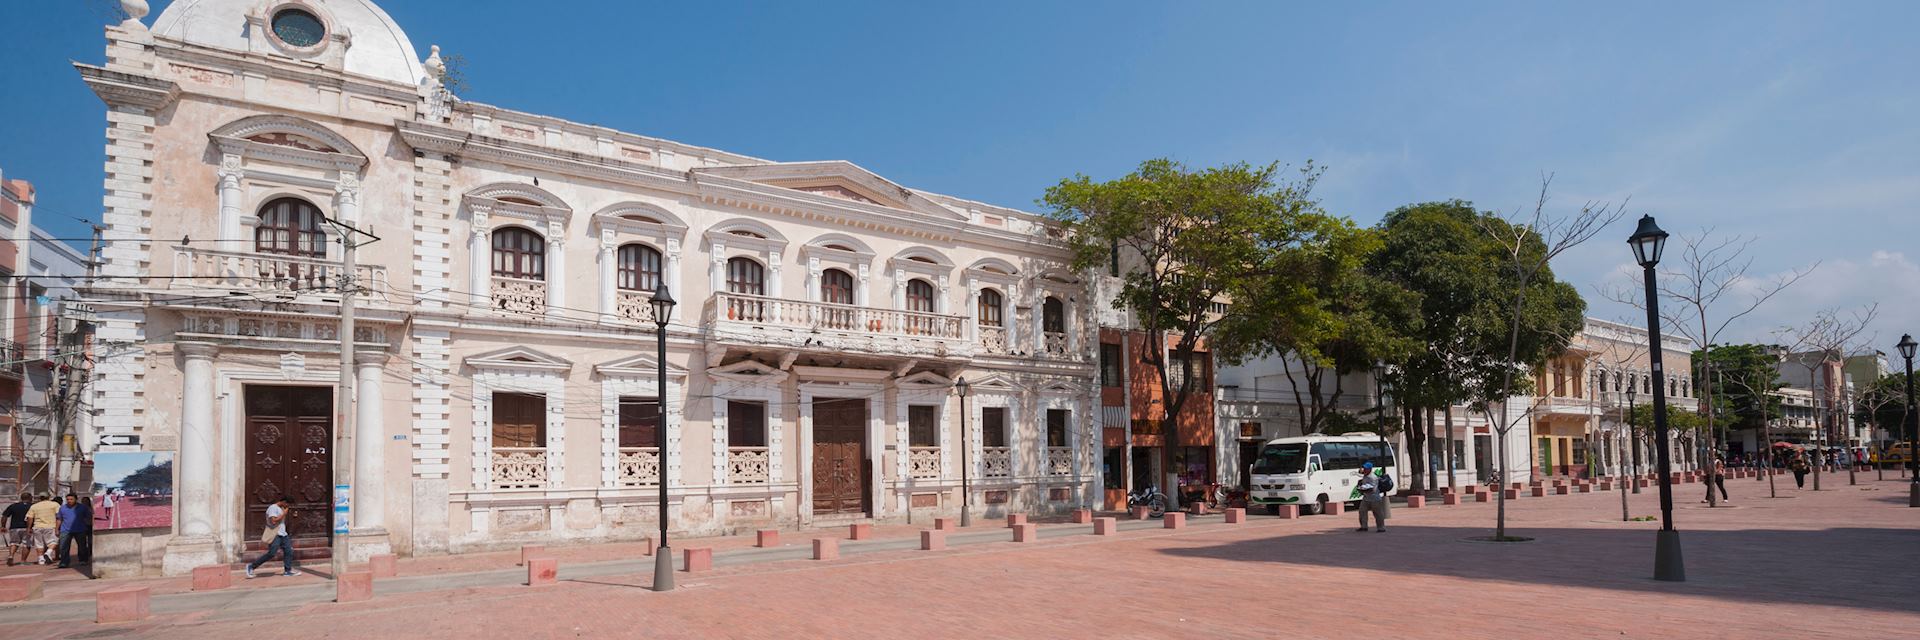 Historic buildings in Santa Marta